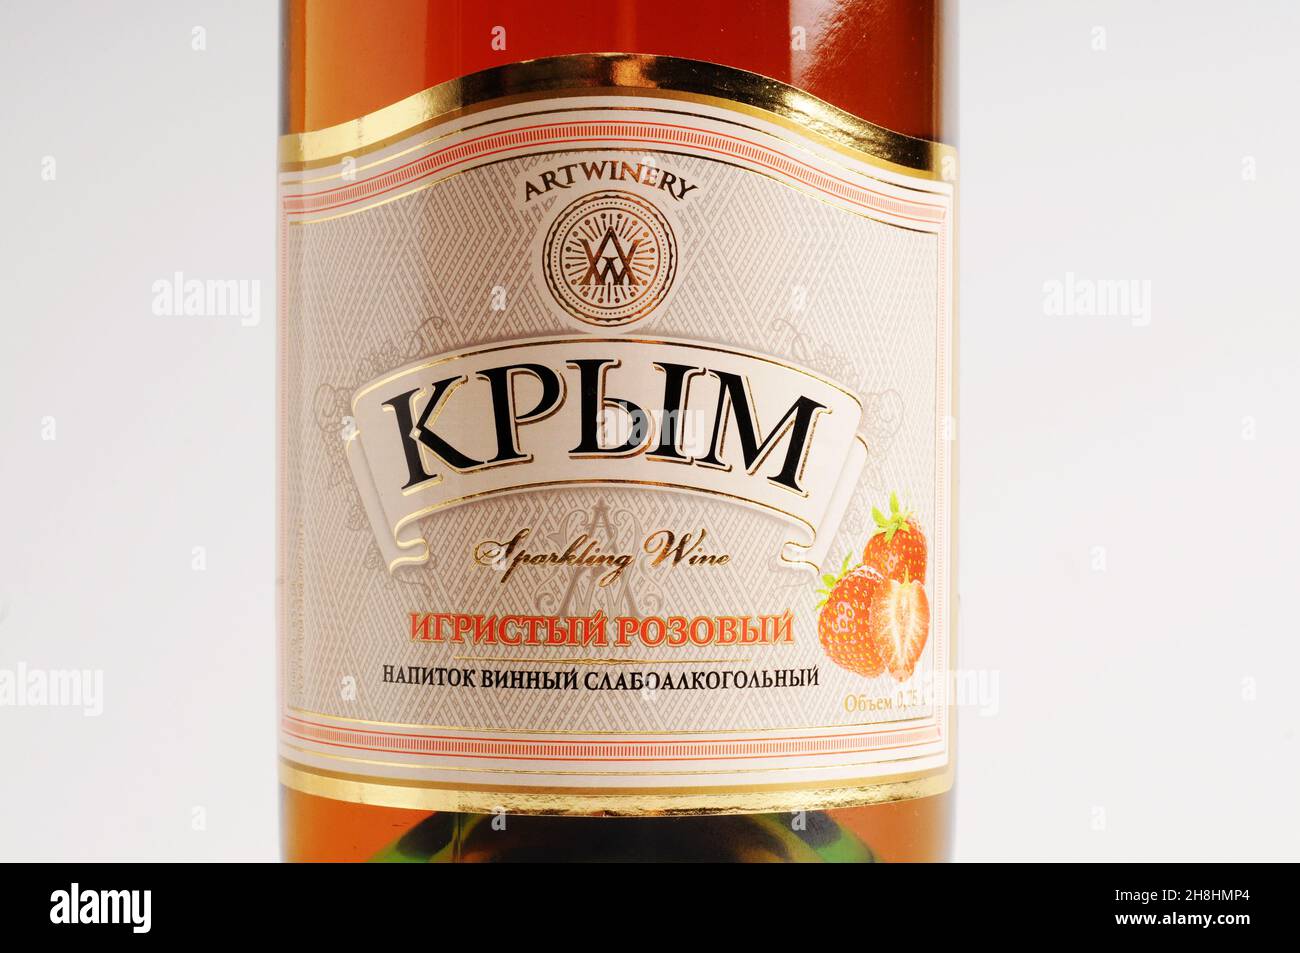 Krim artwinery strawberry champagne, Ukraine Stock Photo